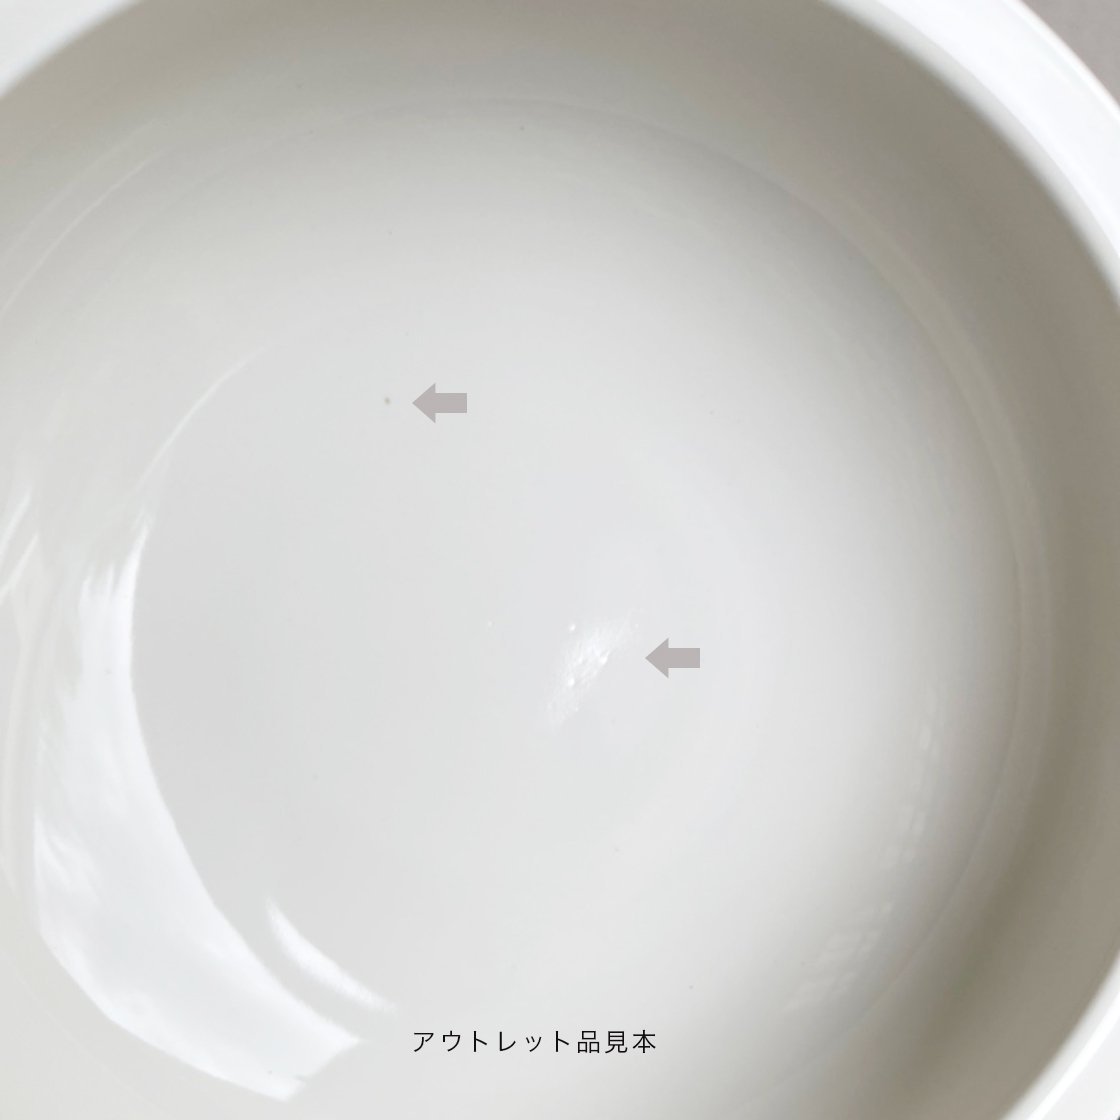 Classy Bowl【5インチ】ライトグレー Made in Japan